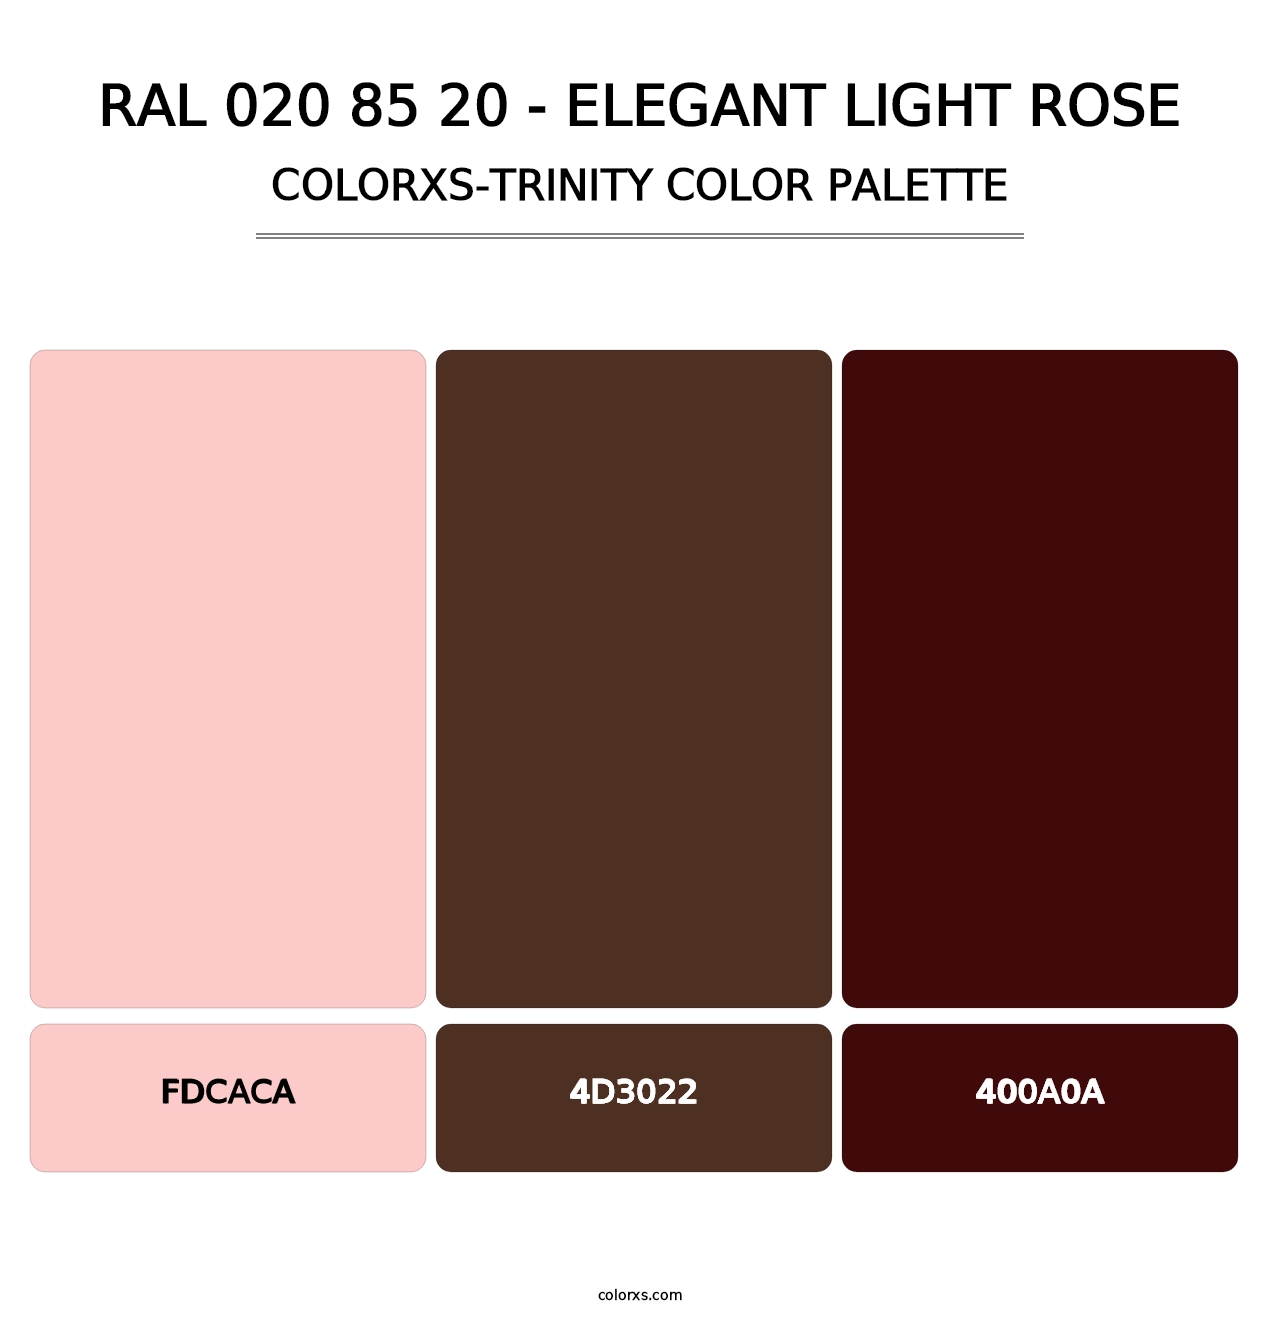 RAL 020 85 20 - Elegant Light Rose - Colorxs Trinity Palette